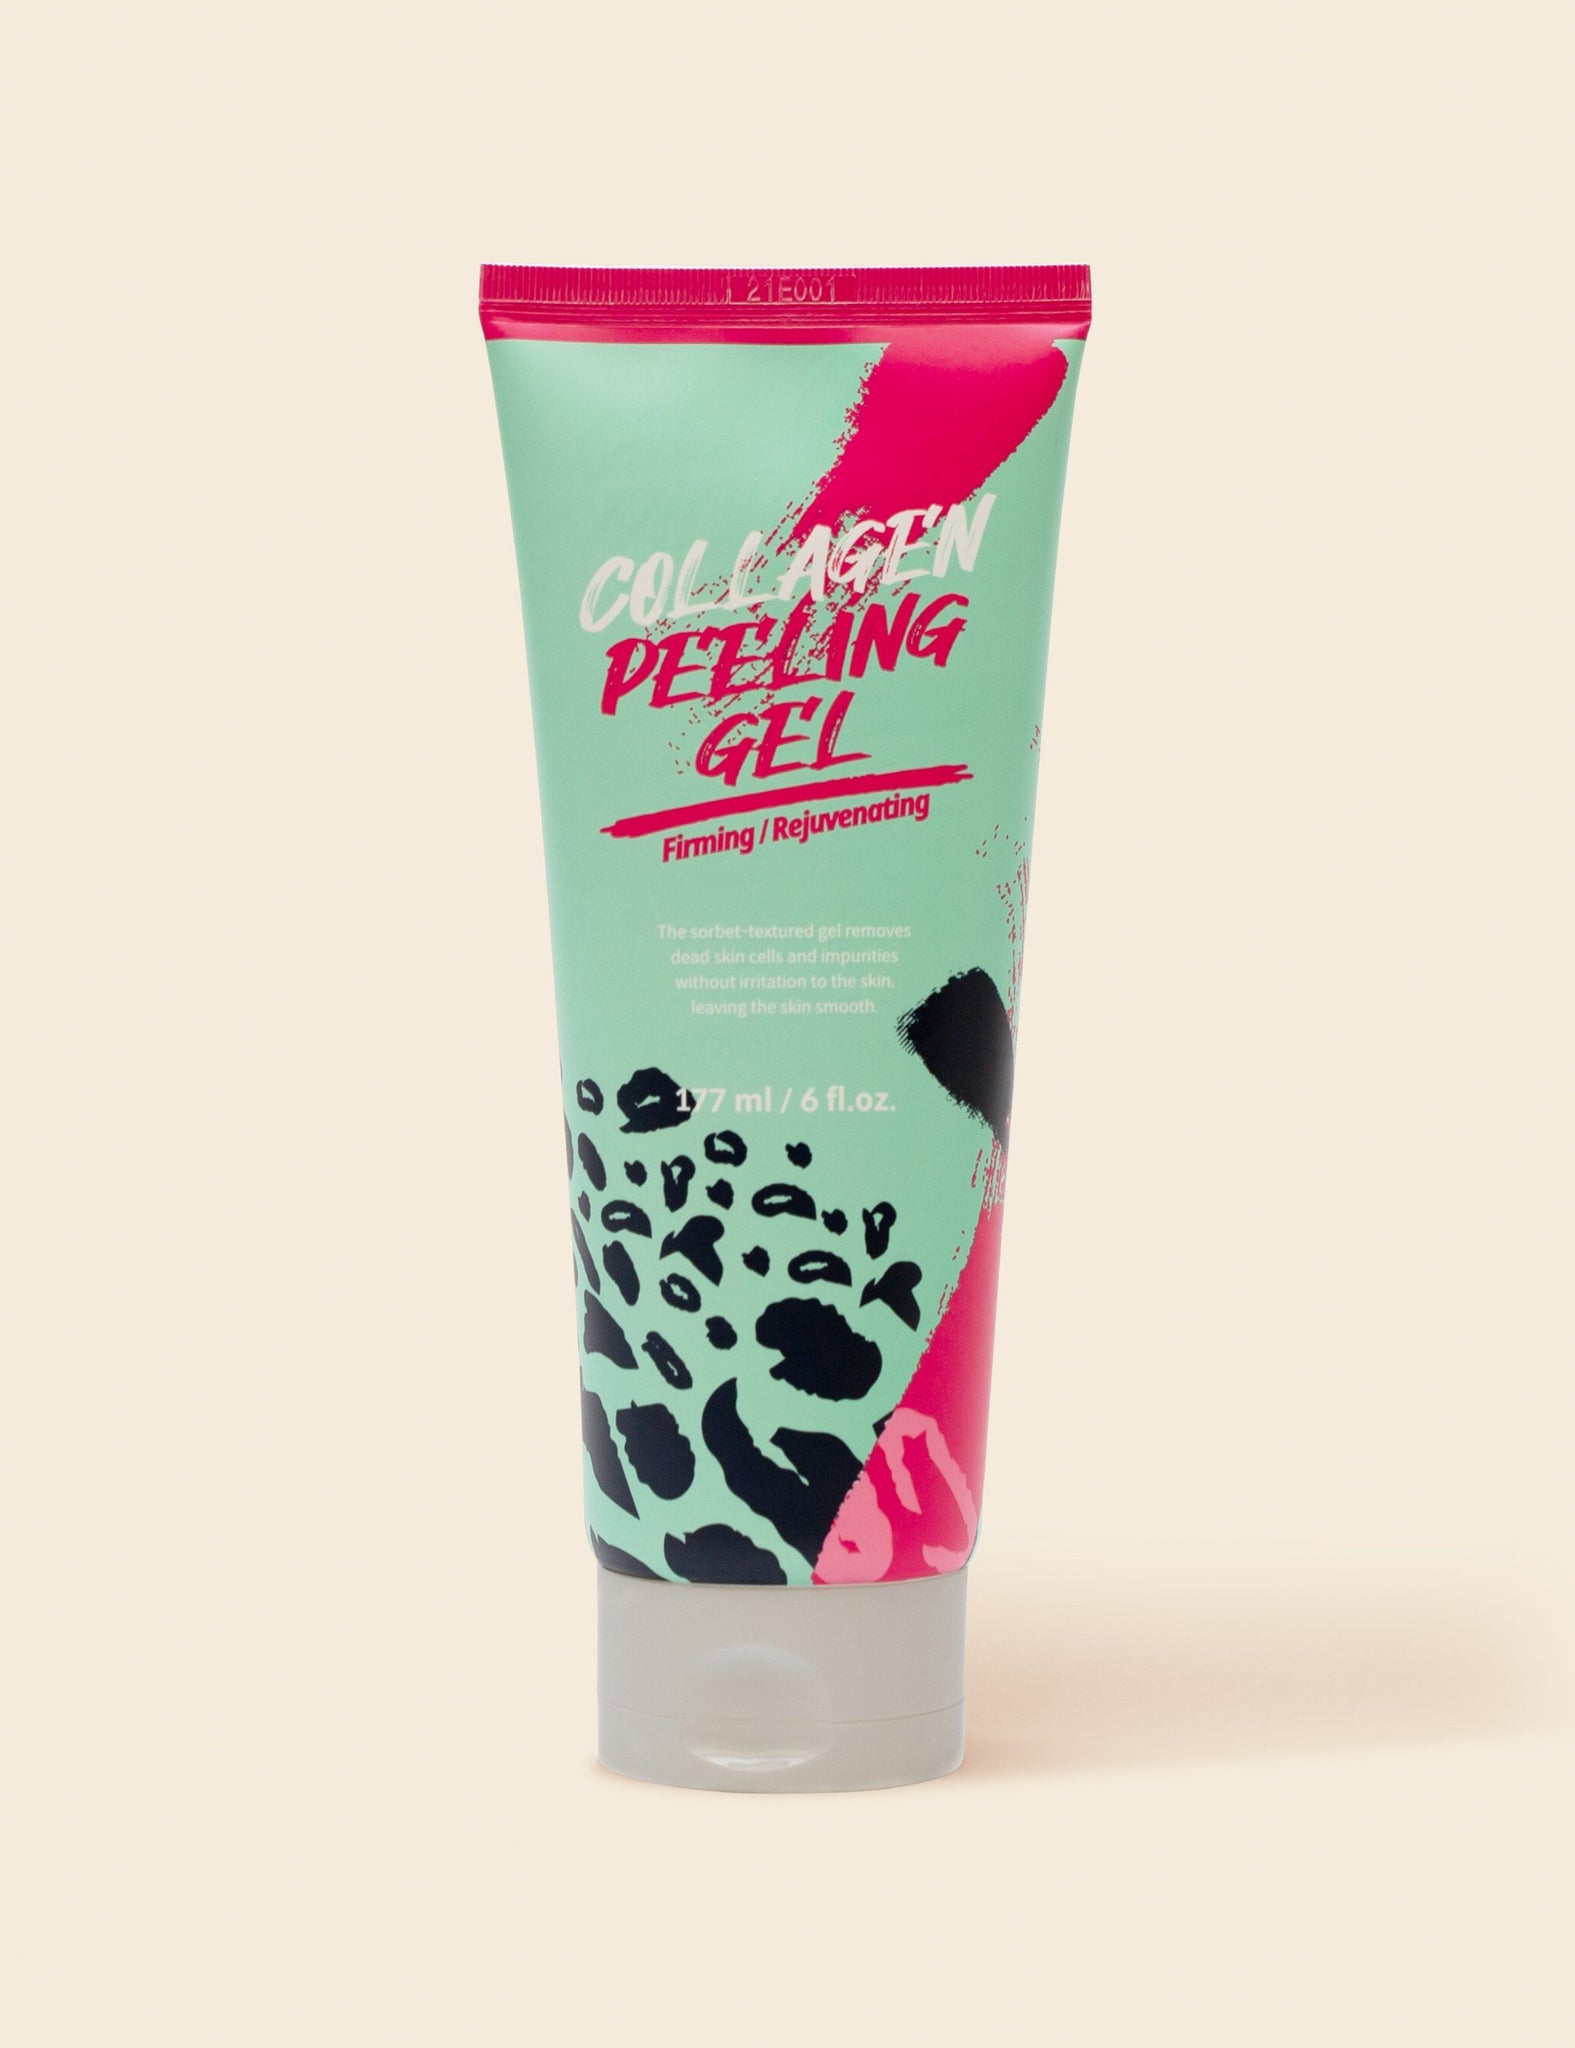 Collagen Peeling Gel - moisturizing your skin